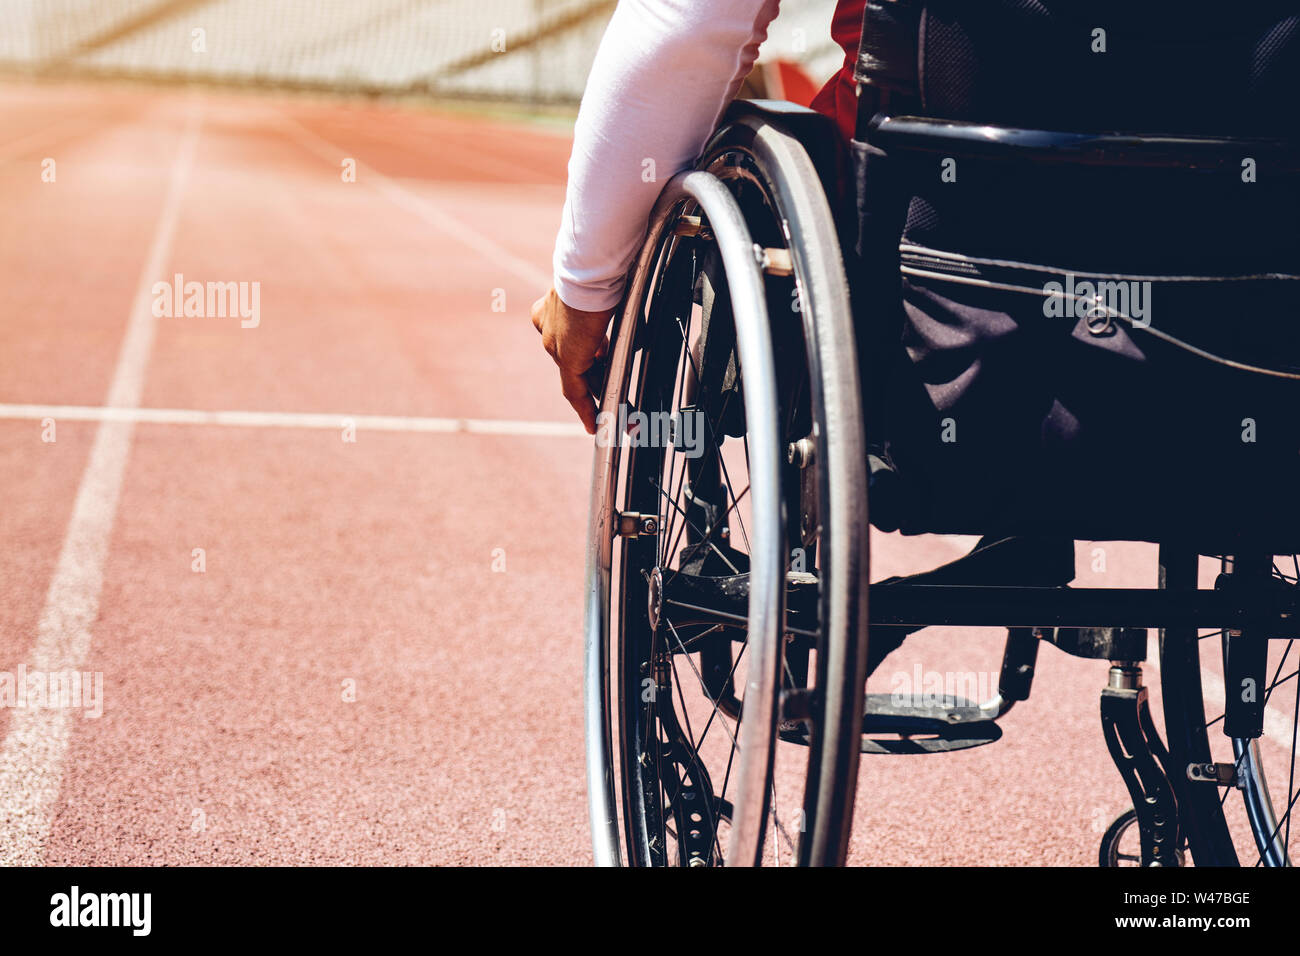 Спортсмен на инвалидной коляске